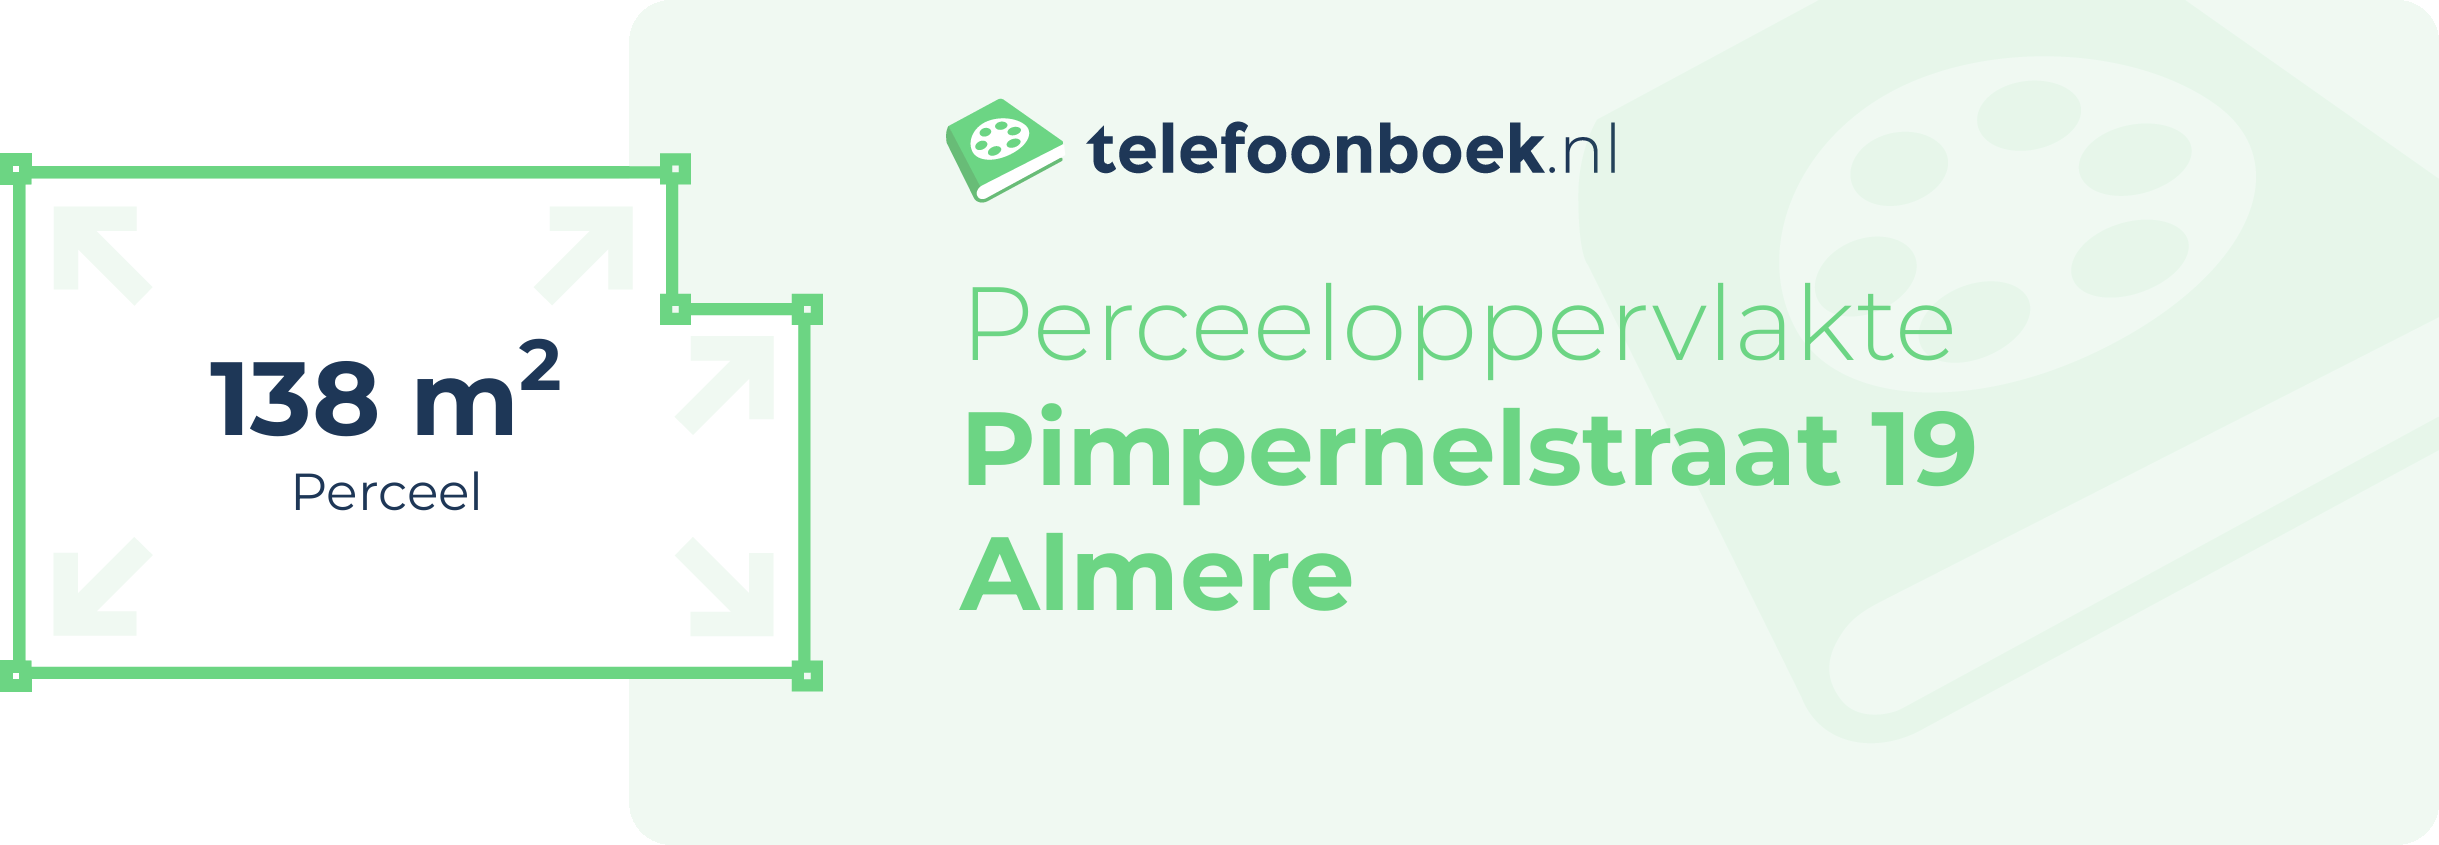 Perceeloppervlakte Pimpernelstraat 19 Almere